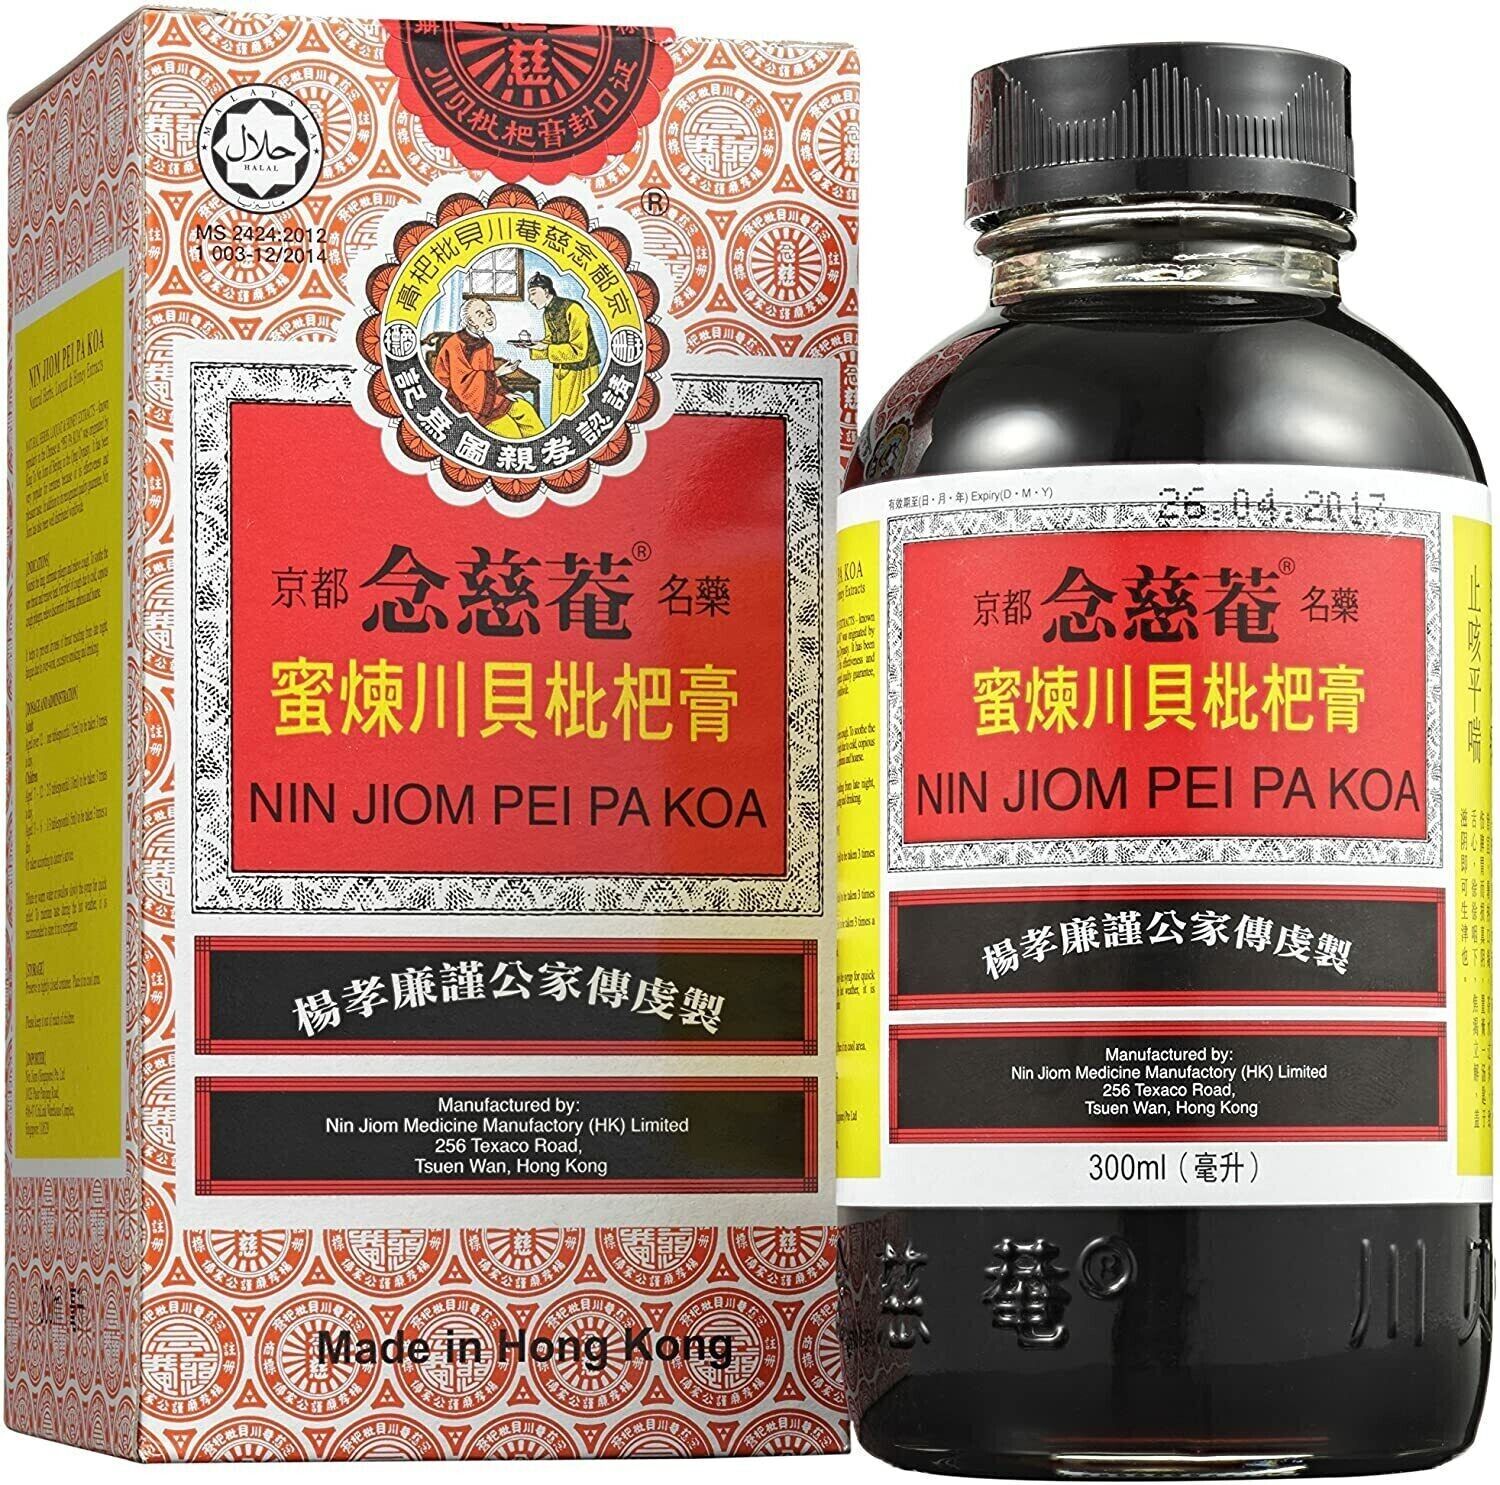 1X Nin Jiom Pei Pa Koa Herbal Throat Syrup Honey and Loquat 300mL - US Seller